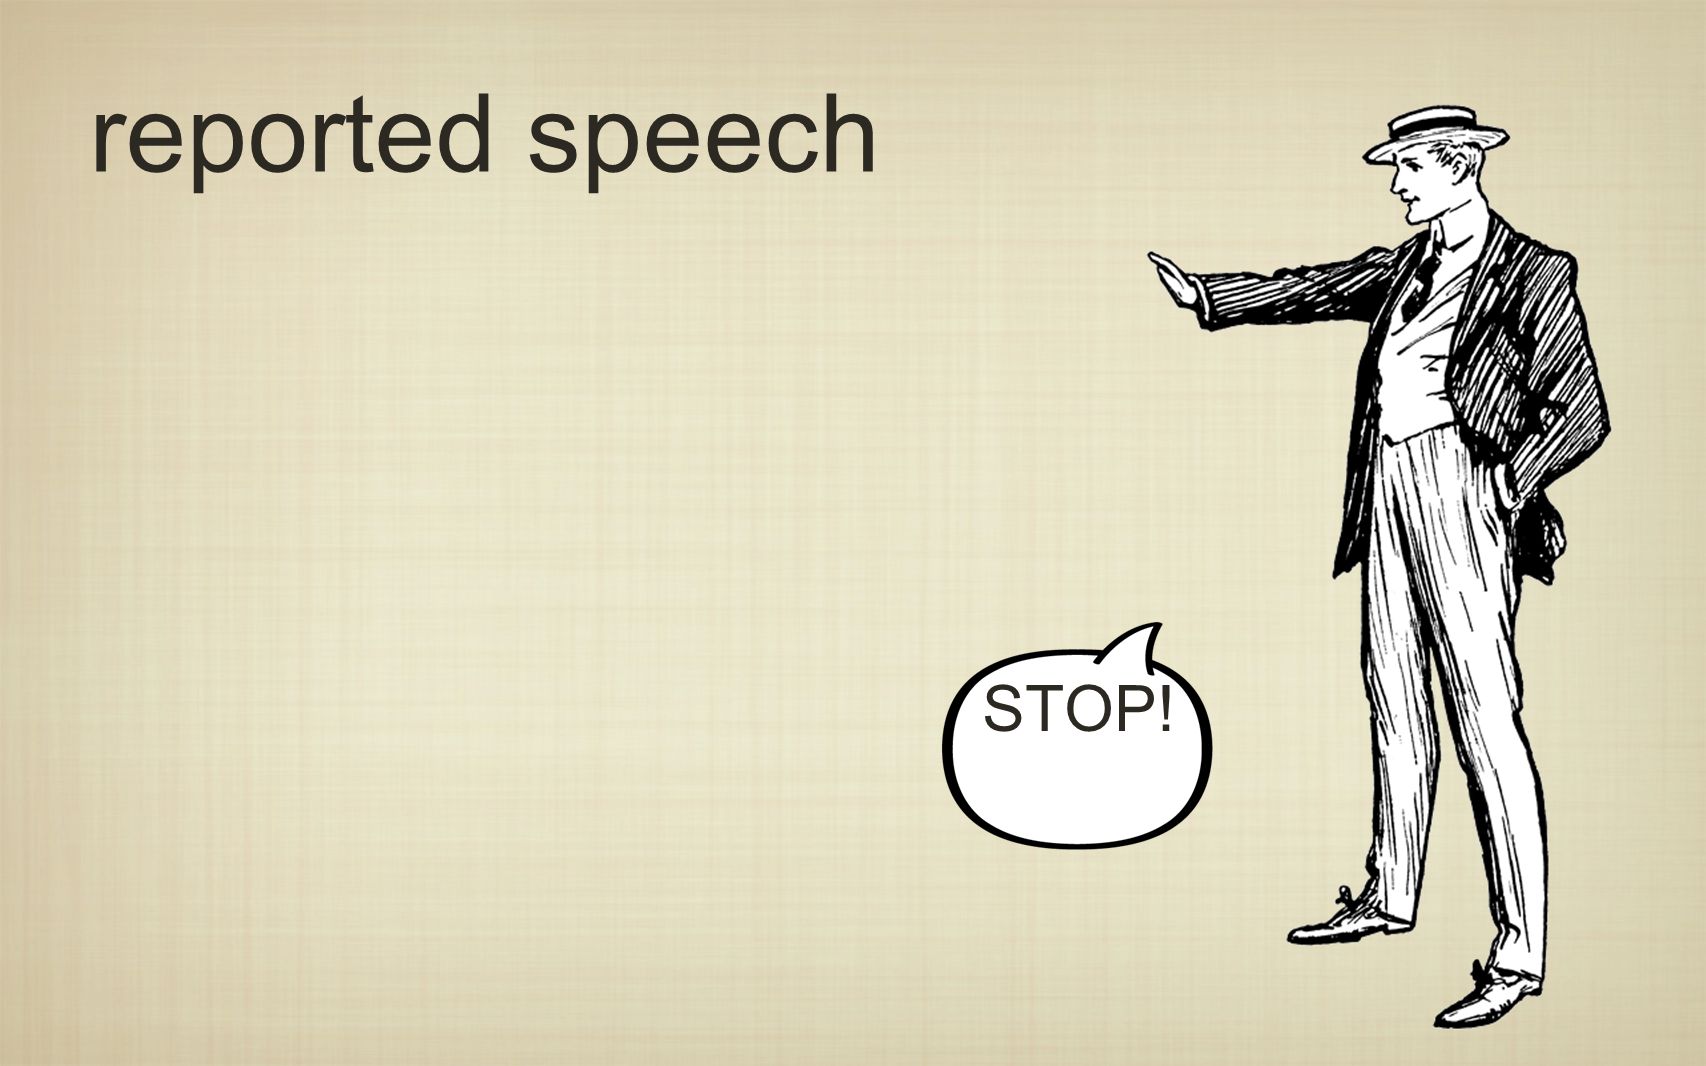 reported speech STOP!